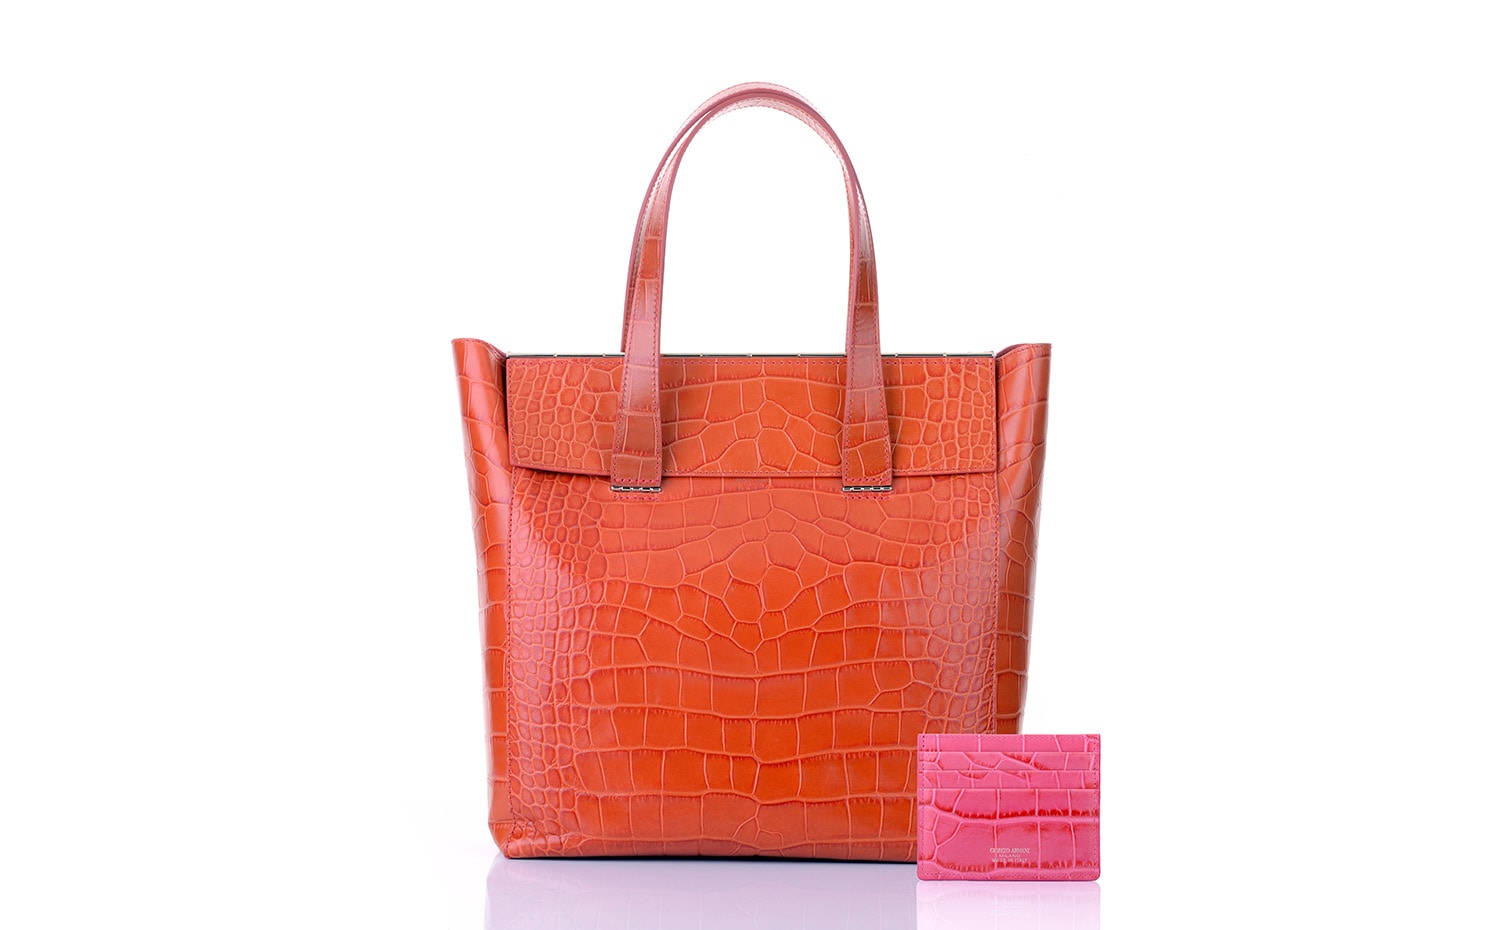 Armani/Marina Bay: Giorgio Armani Mock Croc Shopper bag with credit card holder